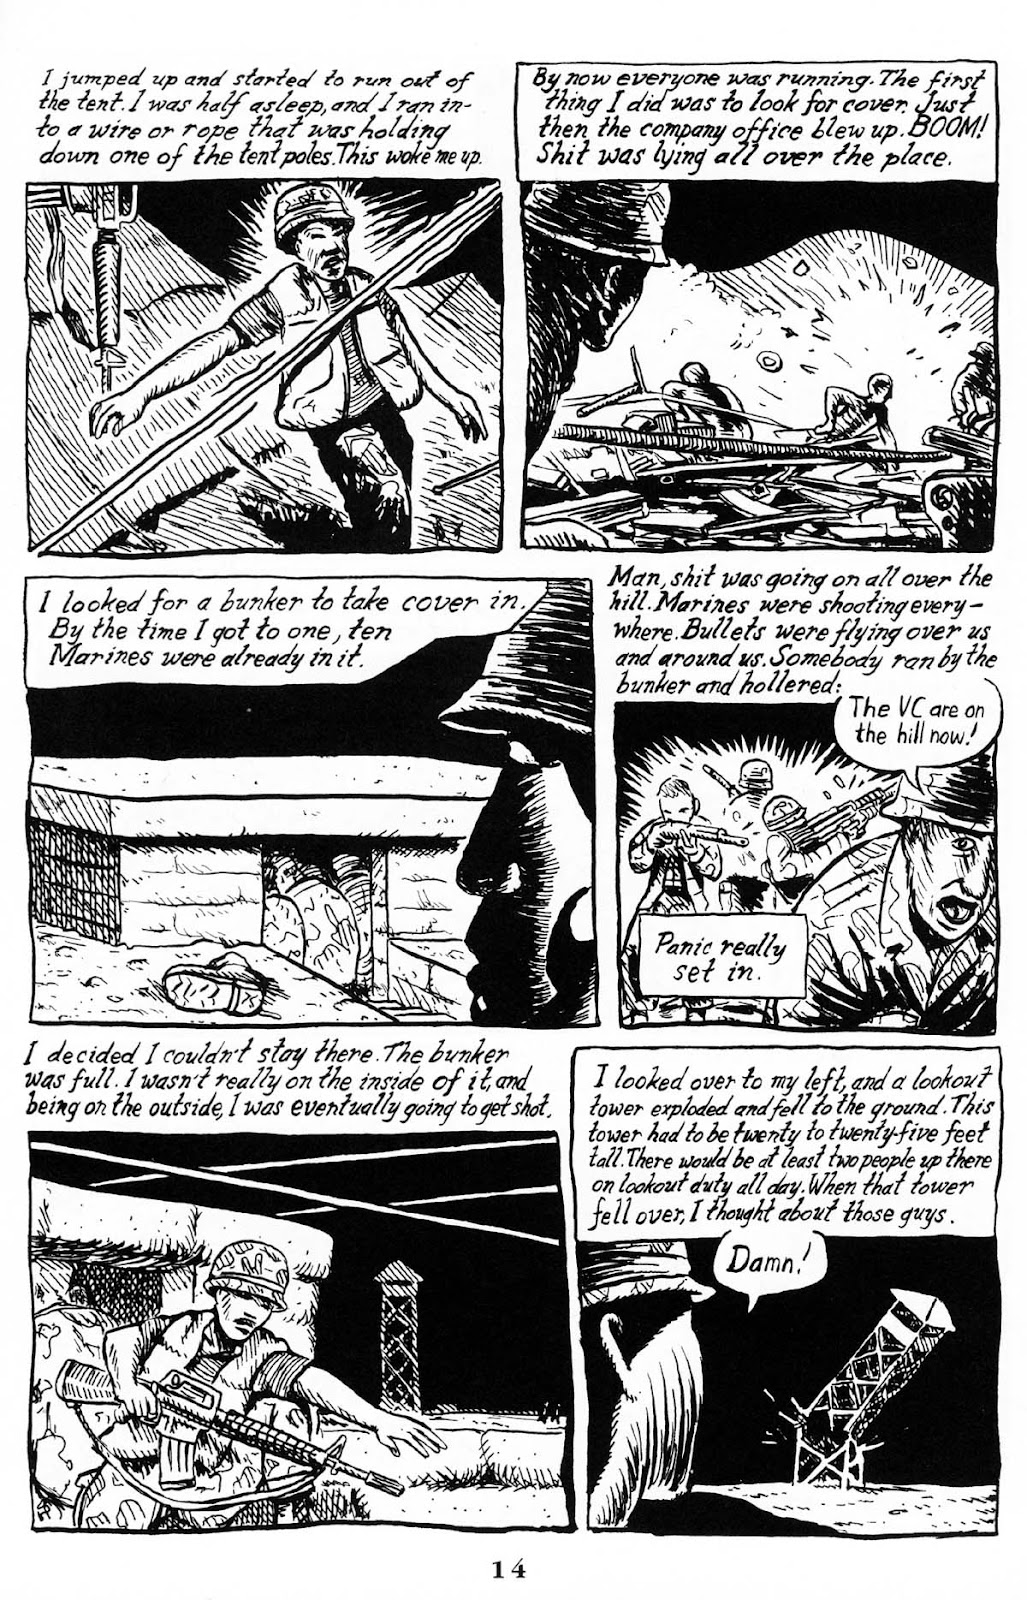 American Splendor: Unsung Hero issue 2 - Page 16